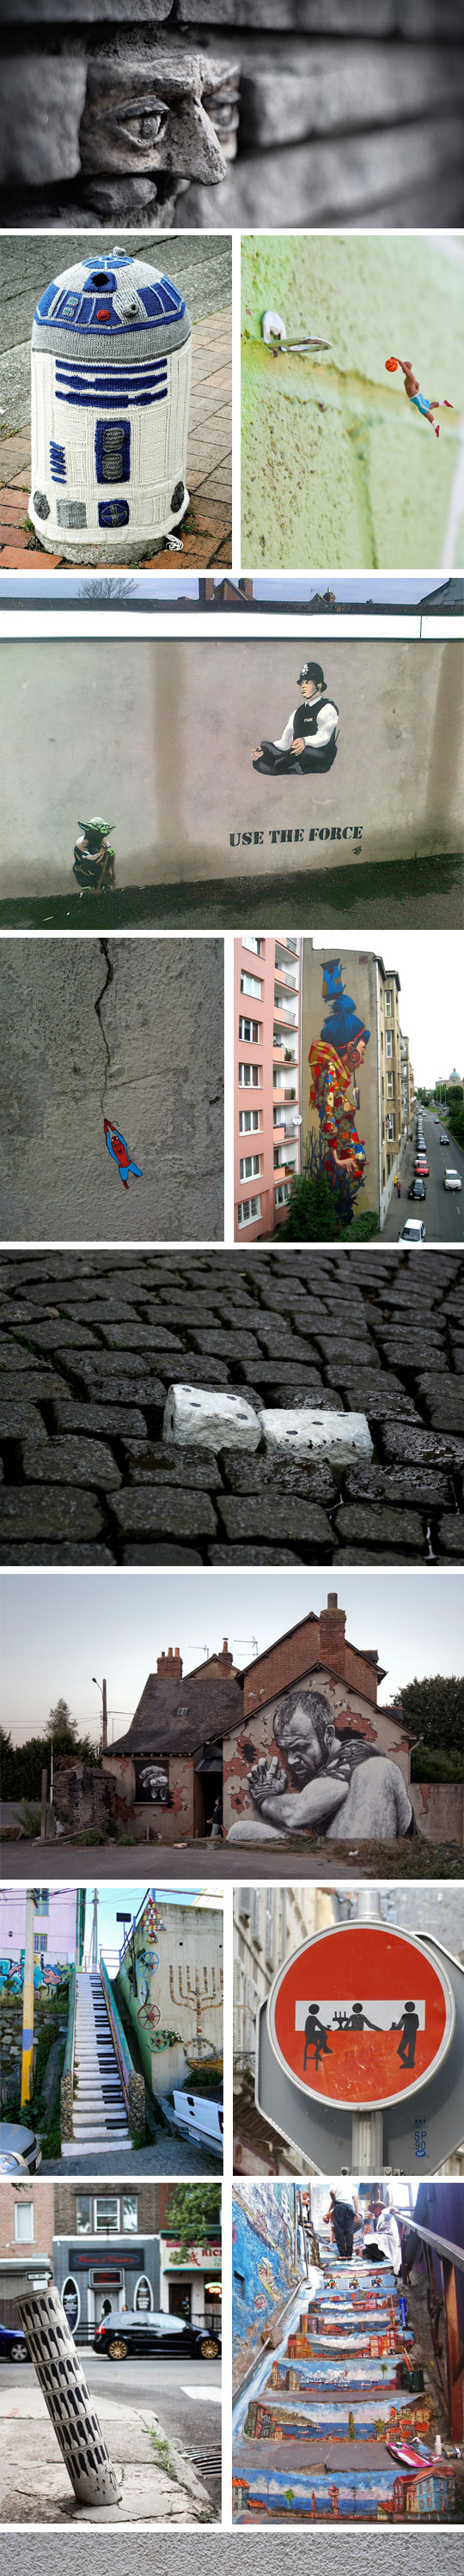 artcool-street-art-painting-graffiti